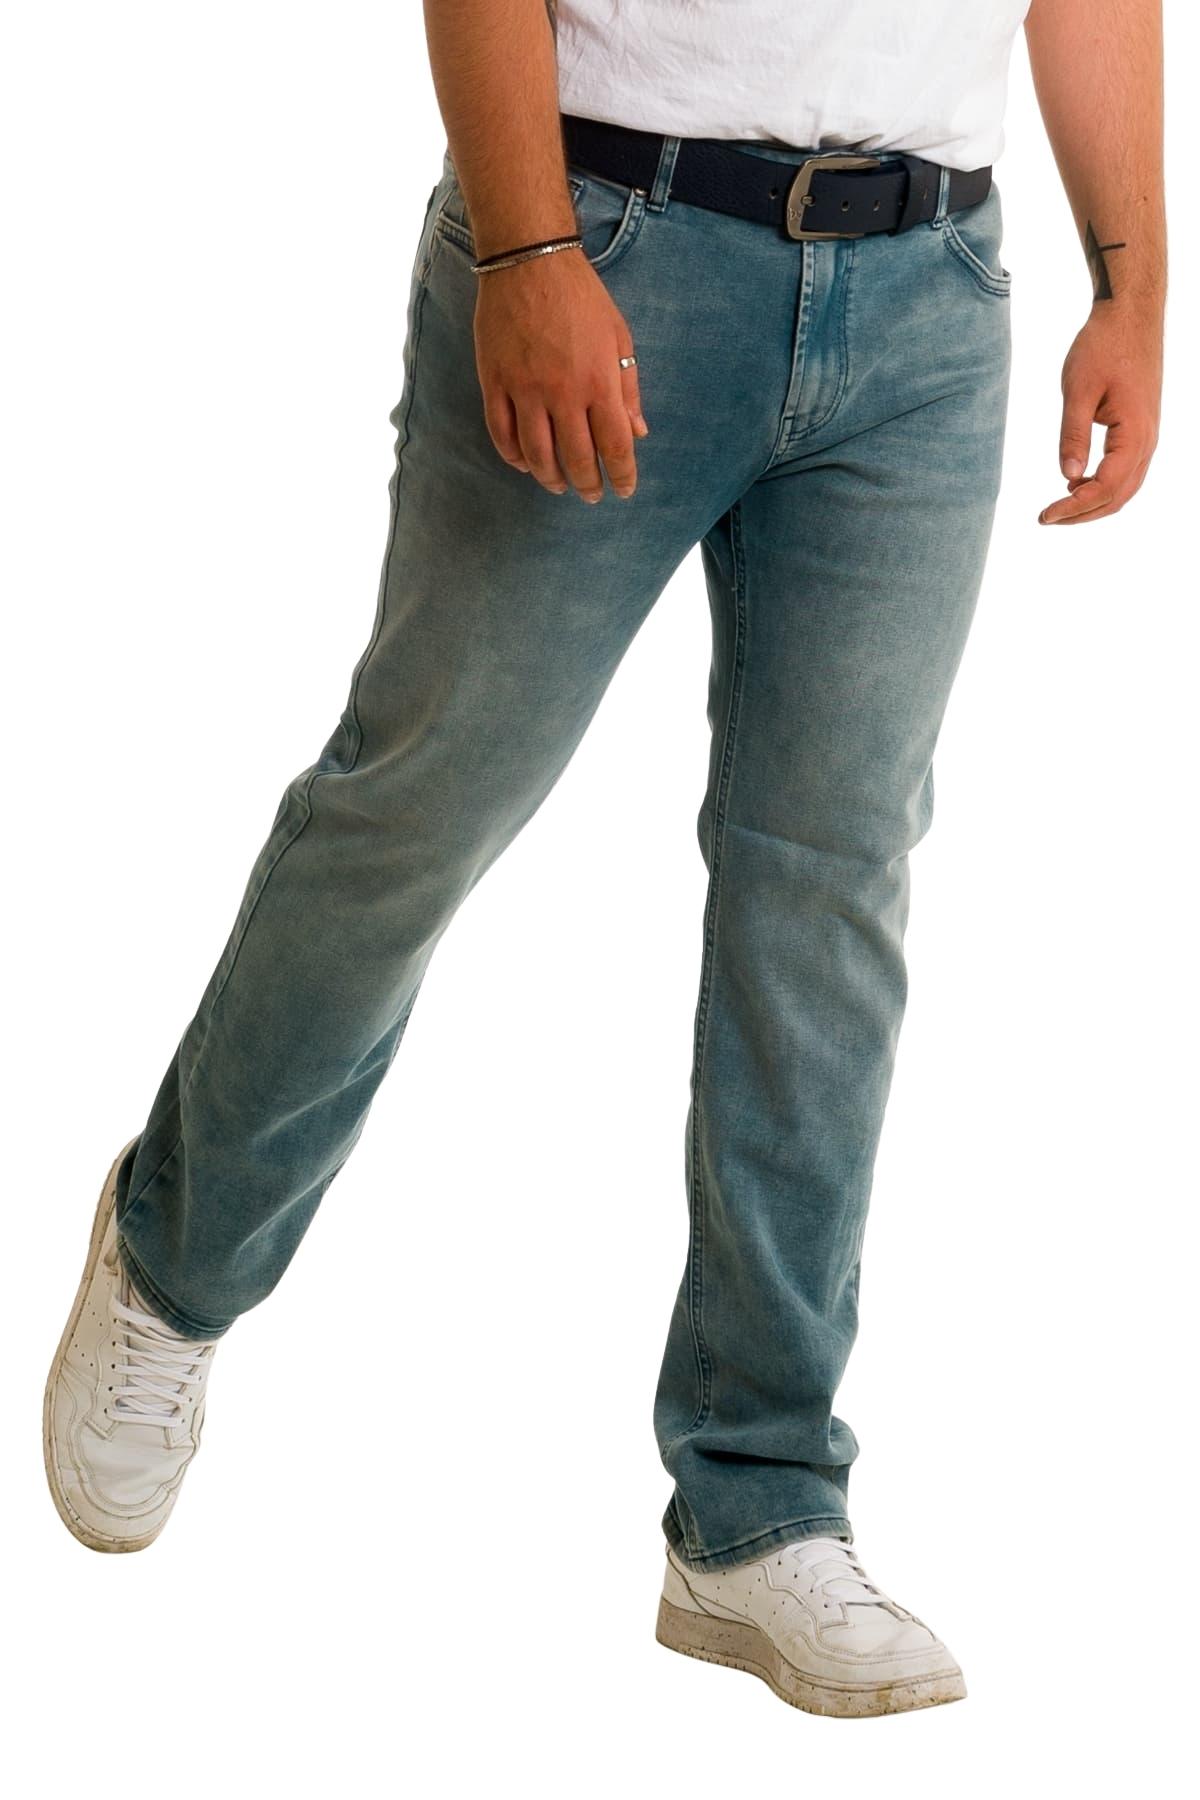 Desperado 962 Düz Model Kemerli Erkek Kot Pantolon